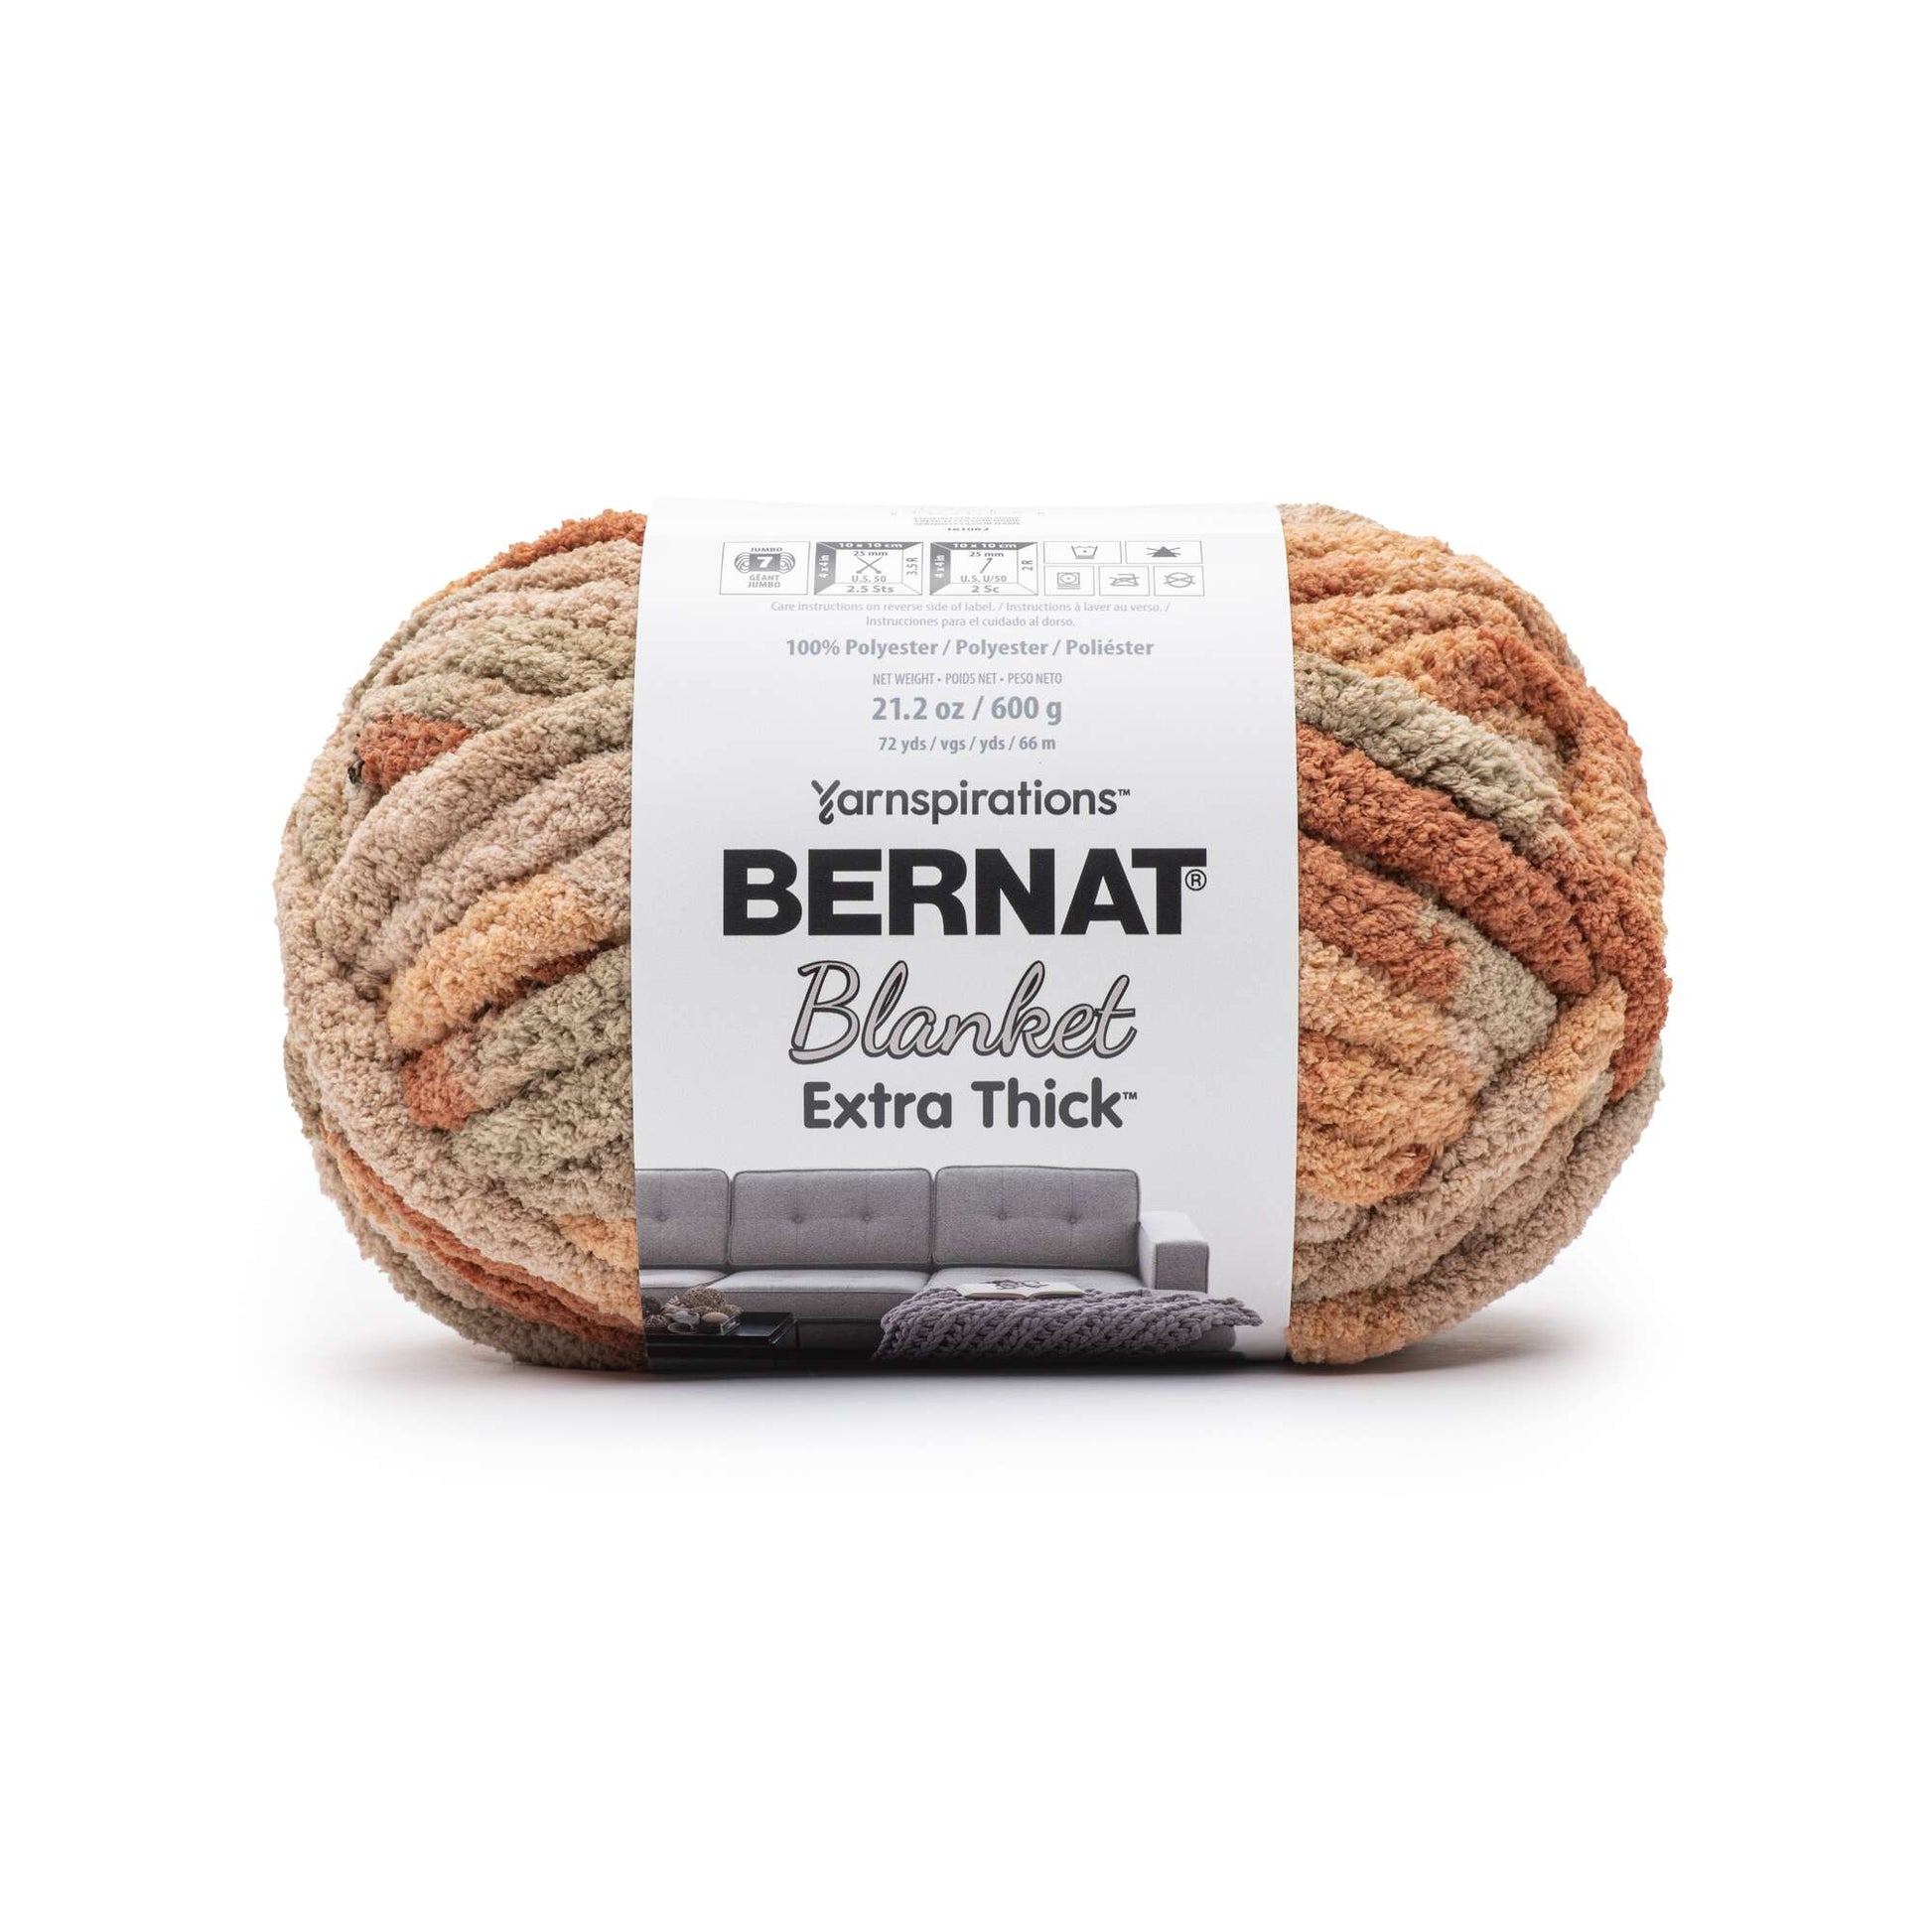 Bernat Blanket Extra Thick Yarn (600g/21.2oz) - Discontinued Shades Clay Carmel